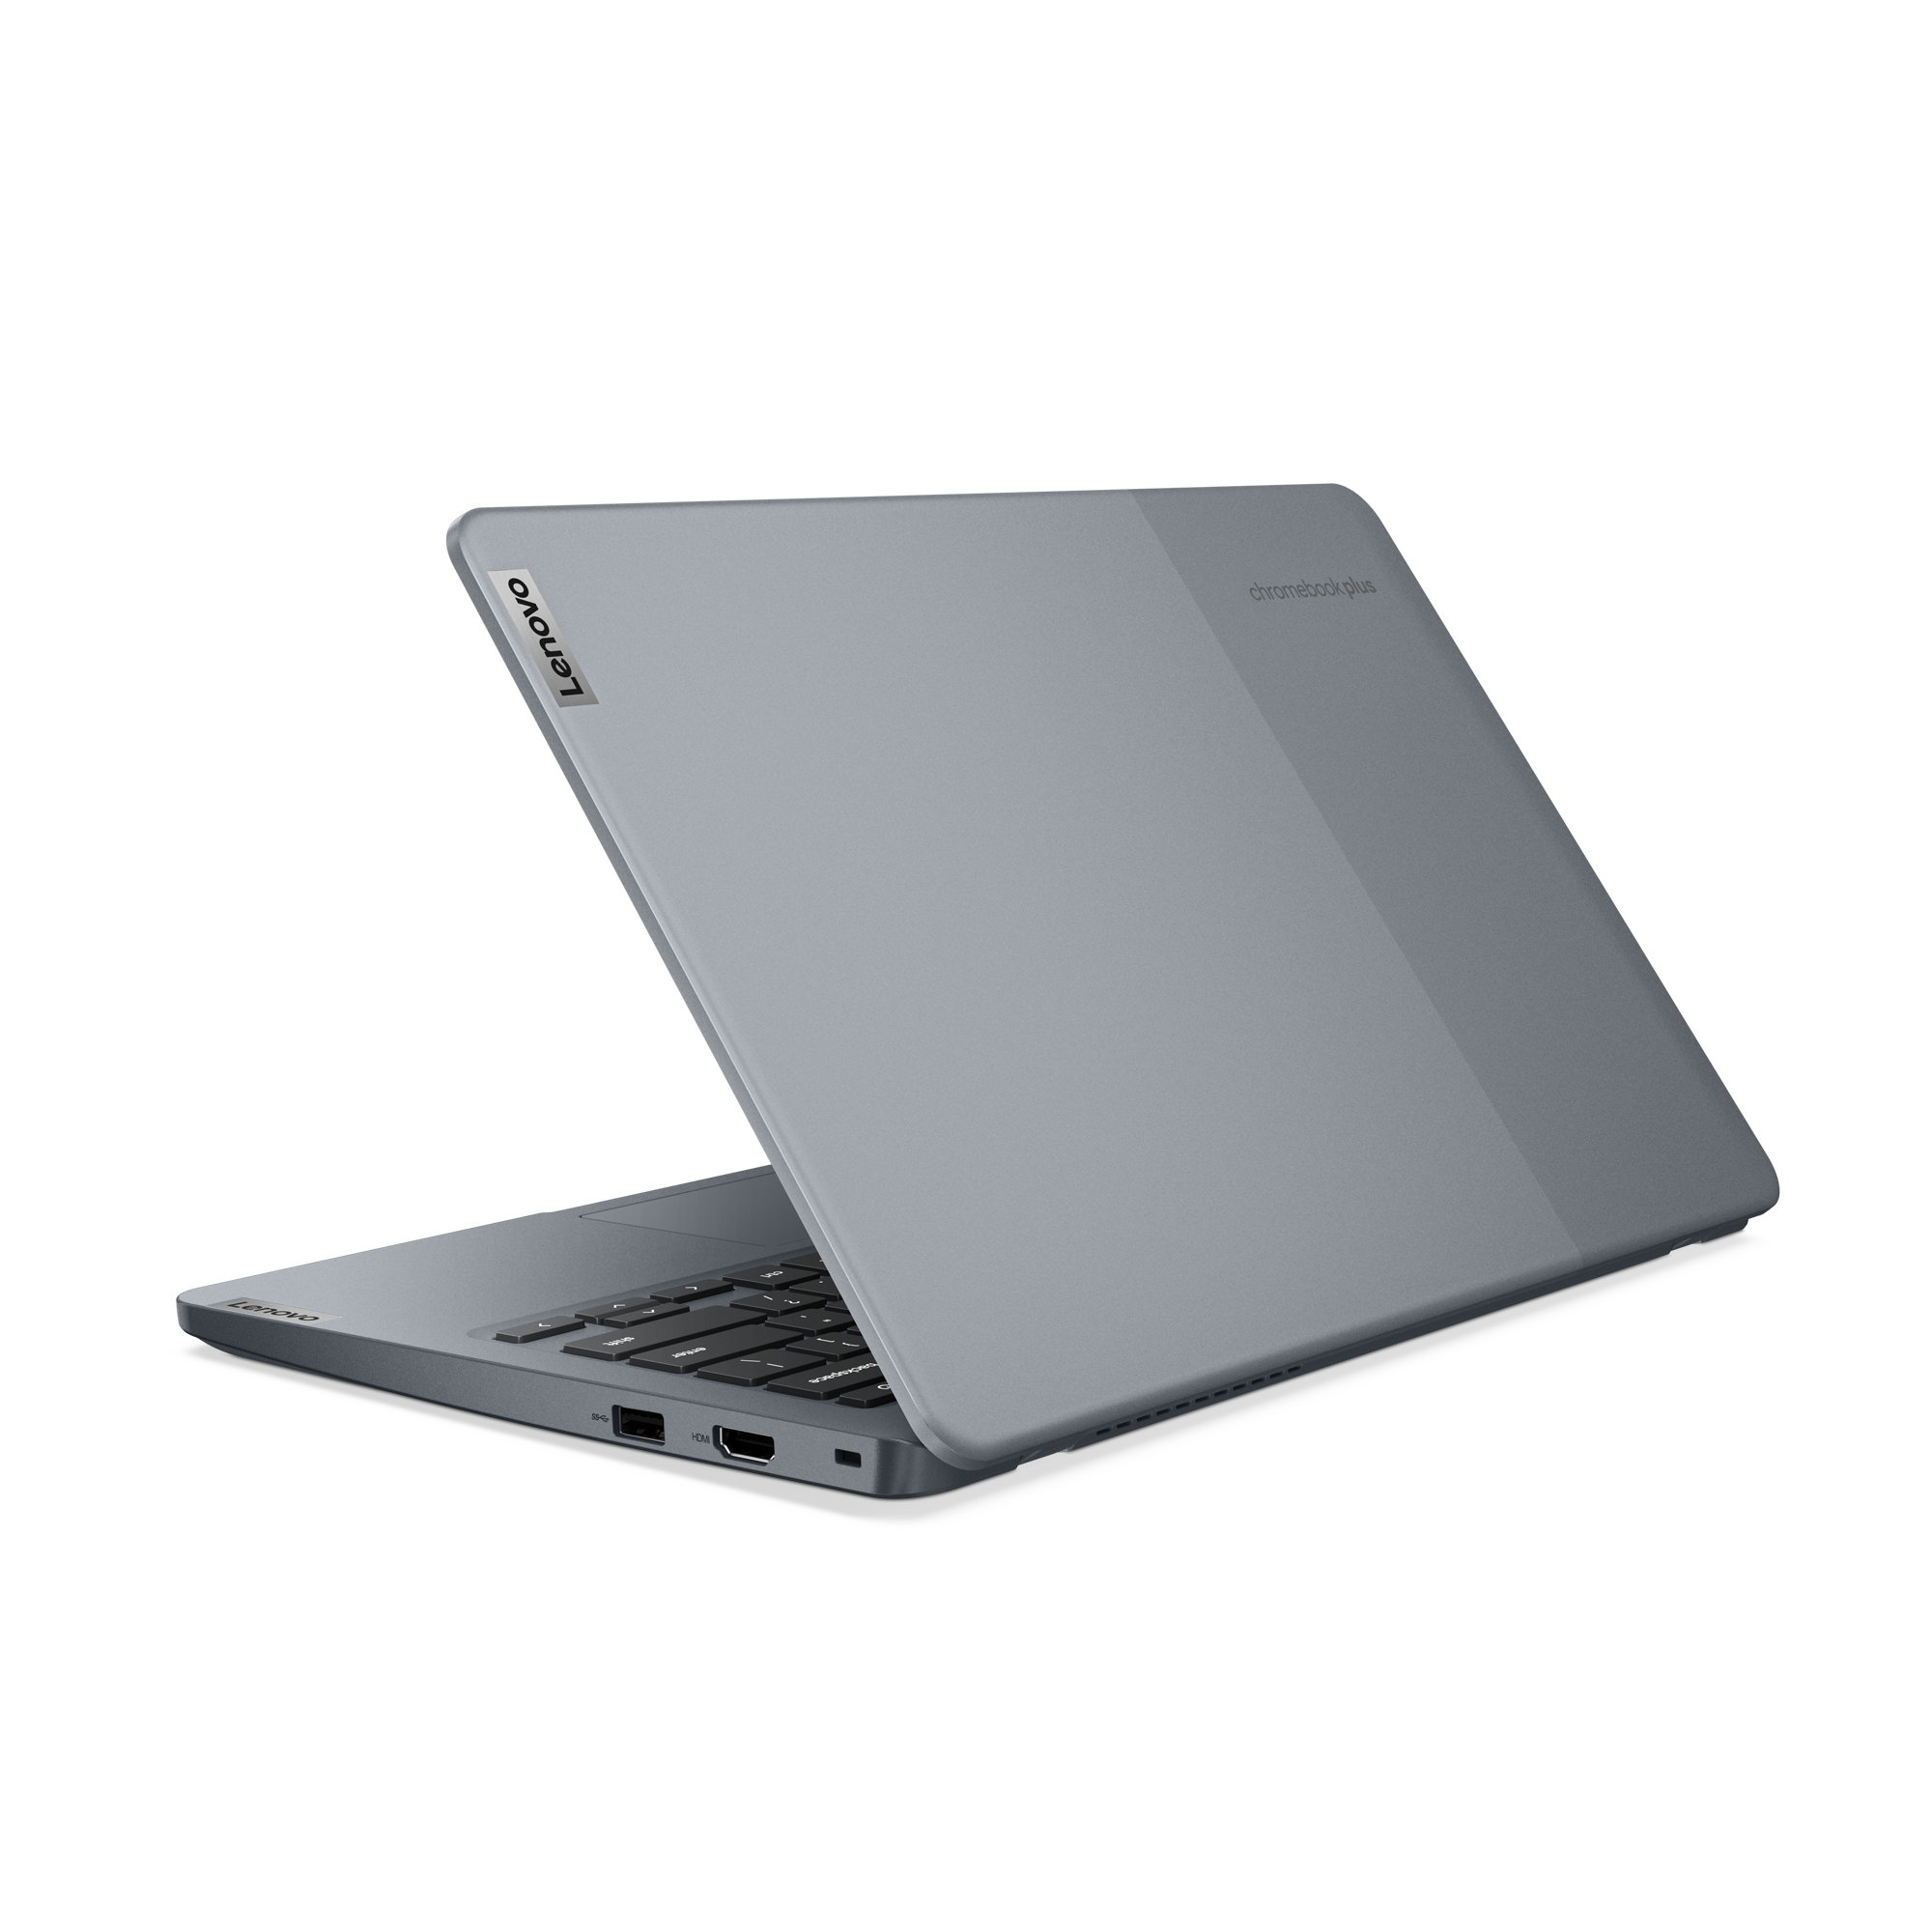 Lenovo unveils new IdeaPad Chromebook laptops with upgraded